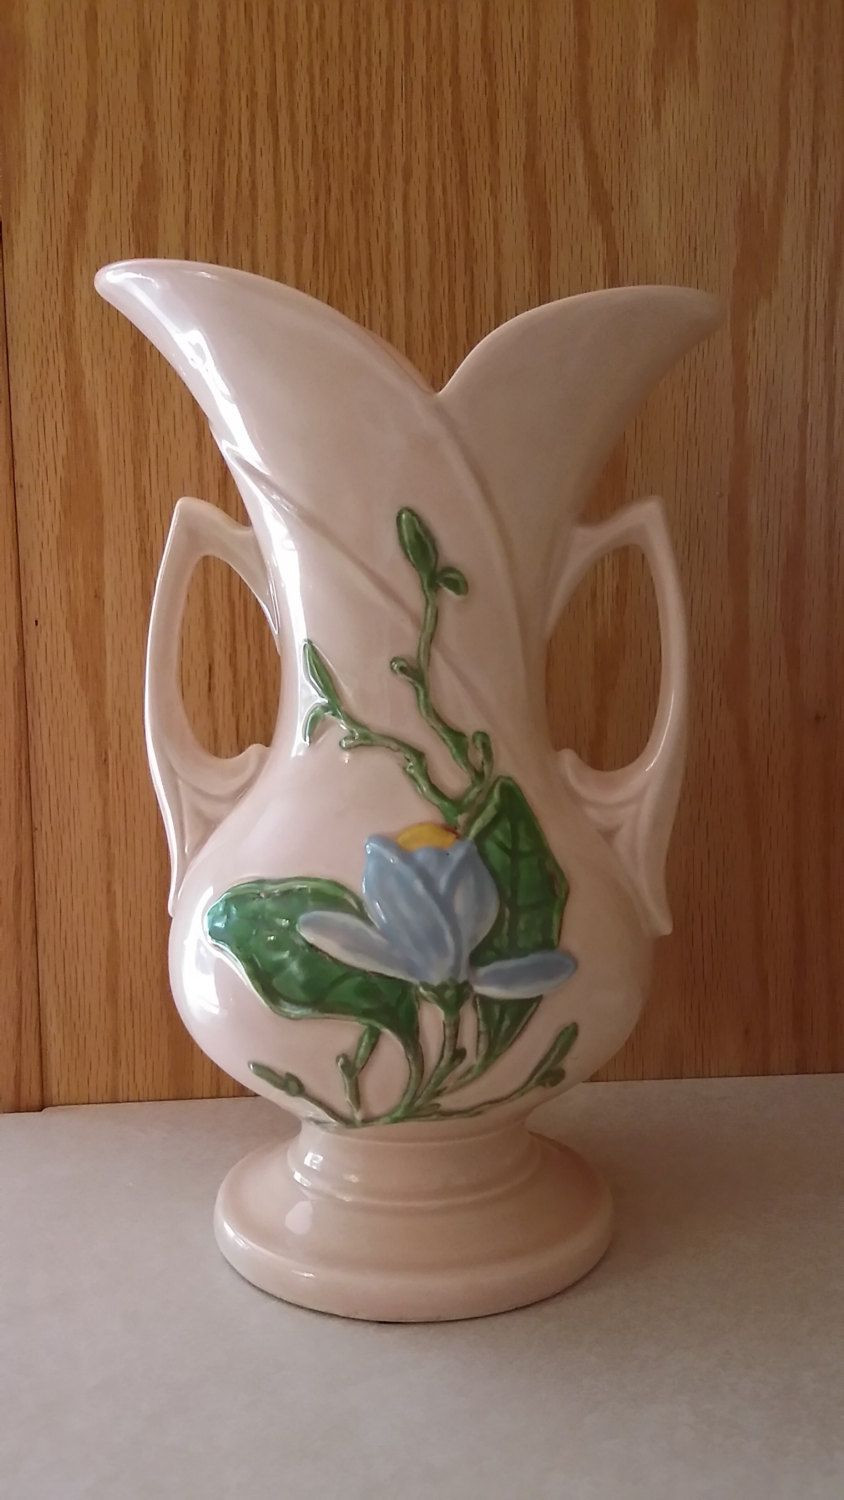 30 Great Rectangular Ceramic Vase 2023 free download rectangular ceramic vase of vtg hull art pottery blue magnolia handled h 12 vase pottery with vtg hull art pottery blue magnolia handled h 12 vase from daisysattic hull art pottery